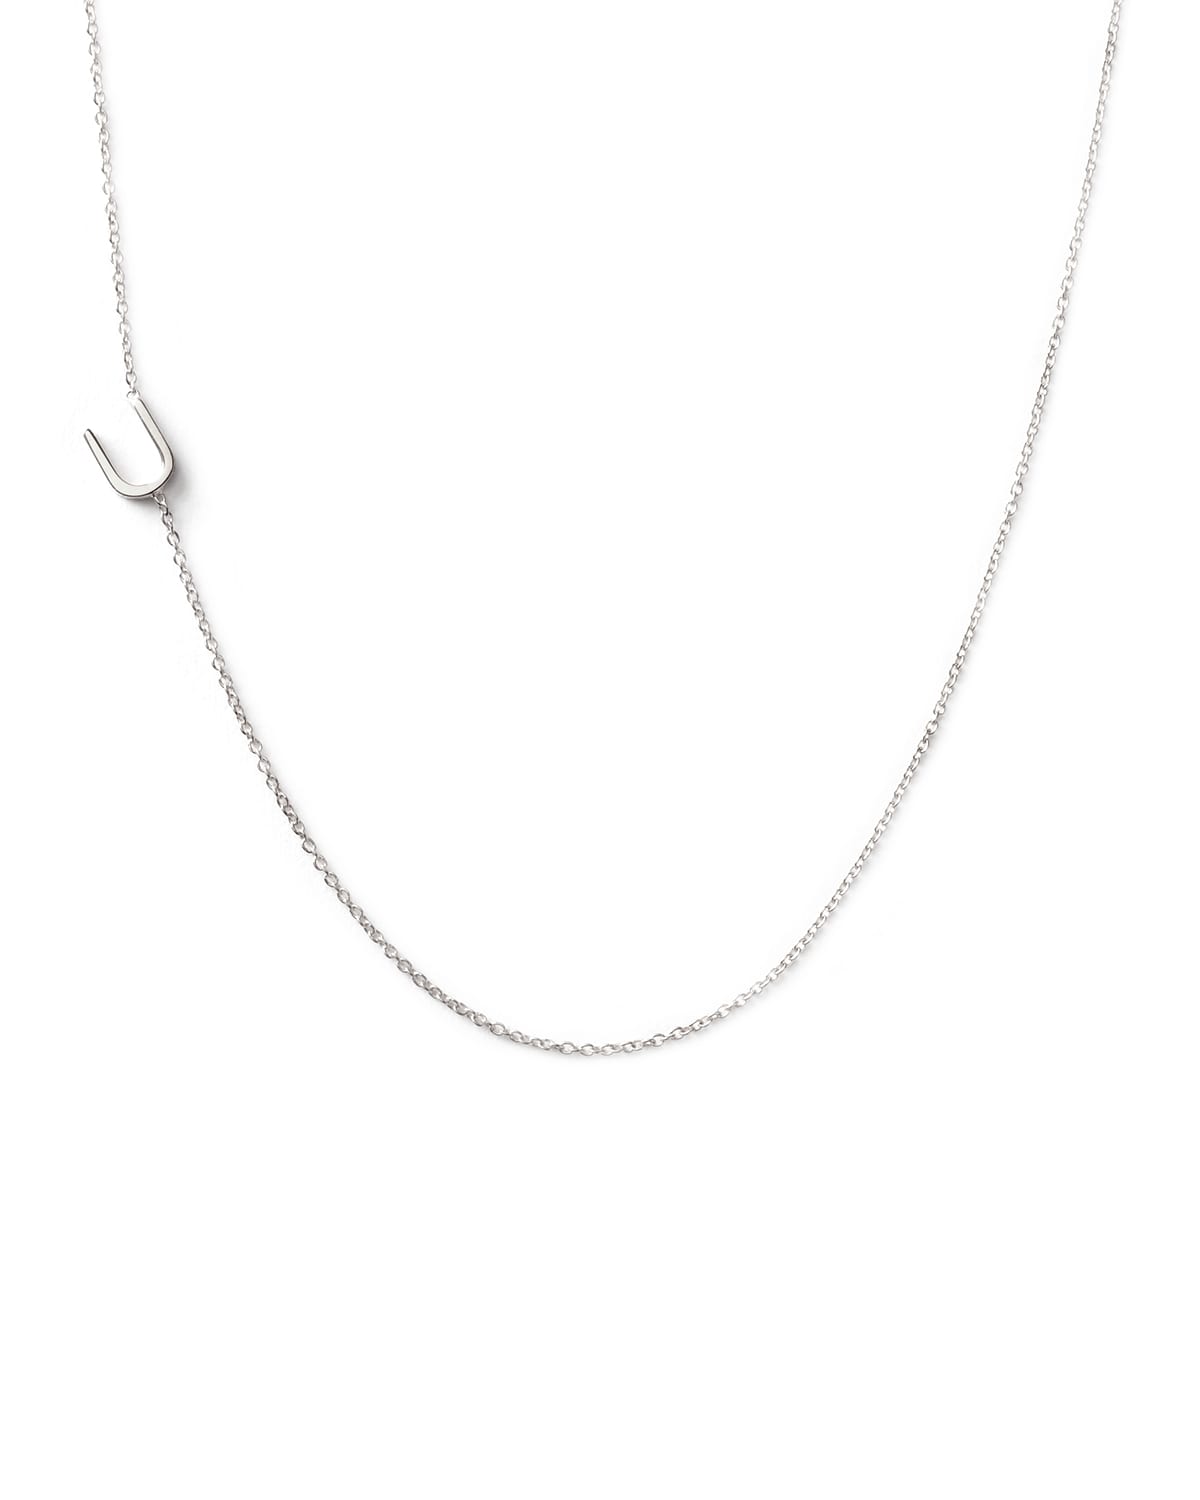 Maya Brenner Designs 14k White Gold Mini Letter Necklace In U